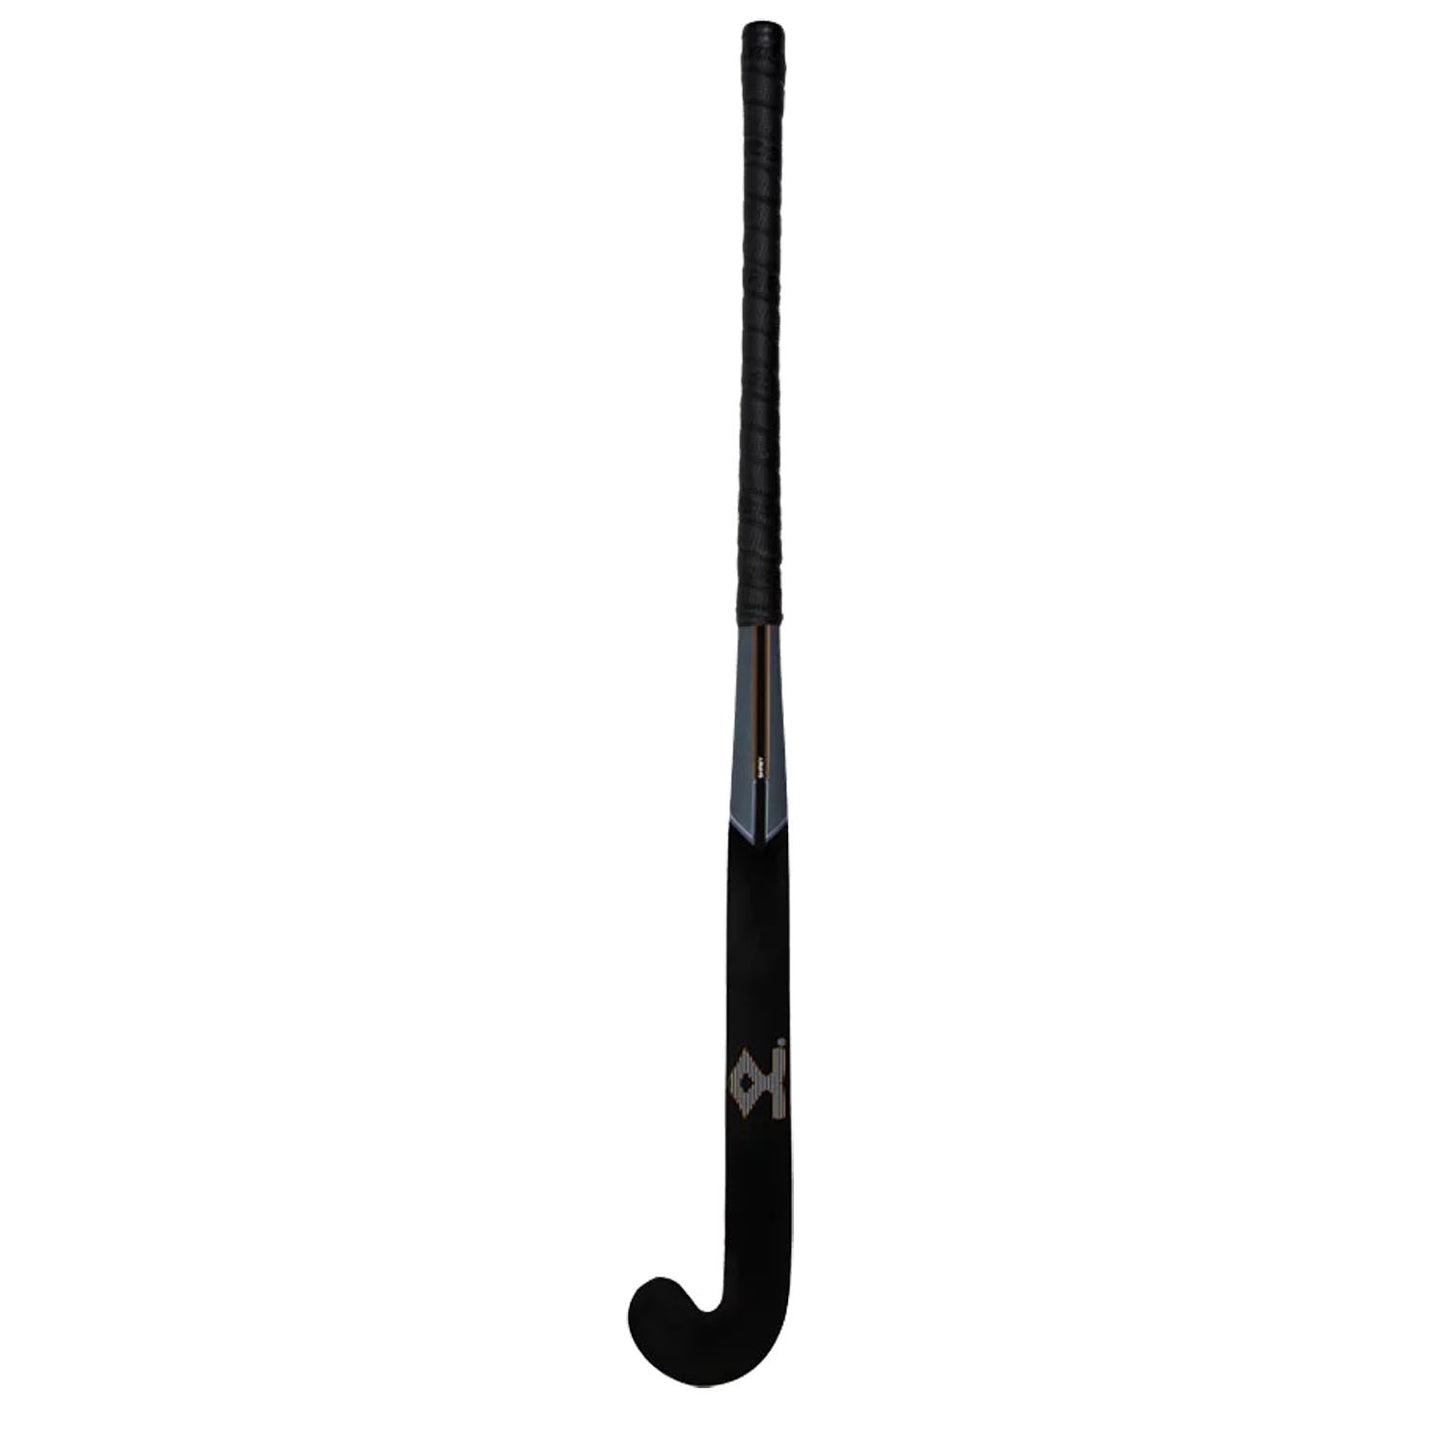 Shrey Legacy 25 Low Bow Ext Hockey Composite Stick, Black/Hot Chocolate - Best Price online Prokicksports.com